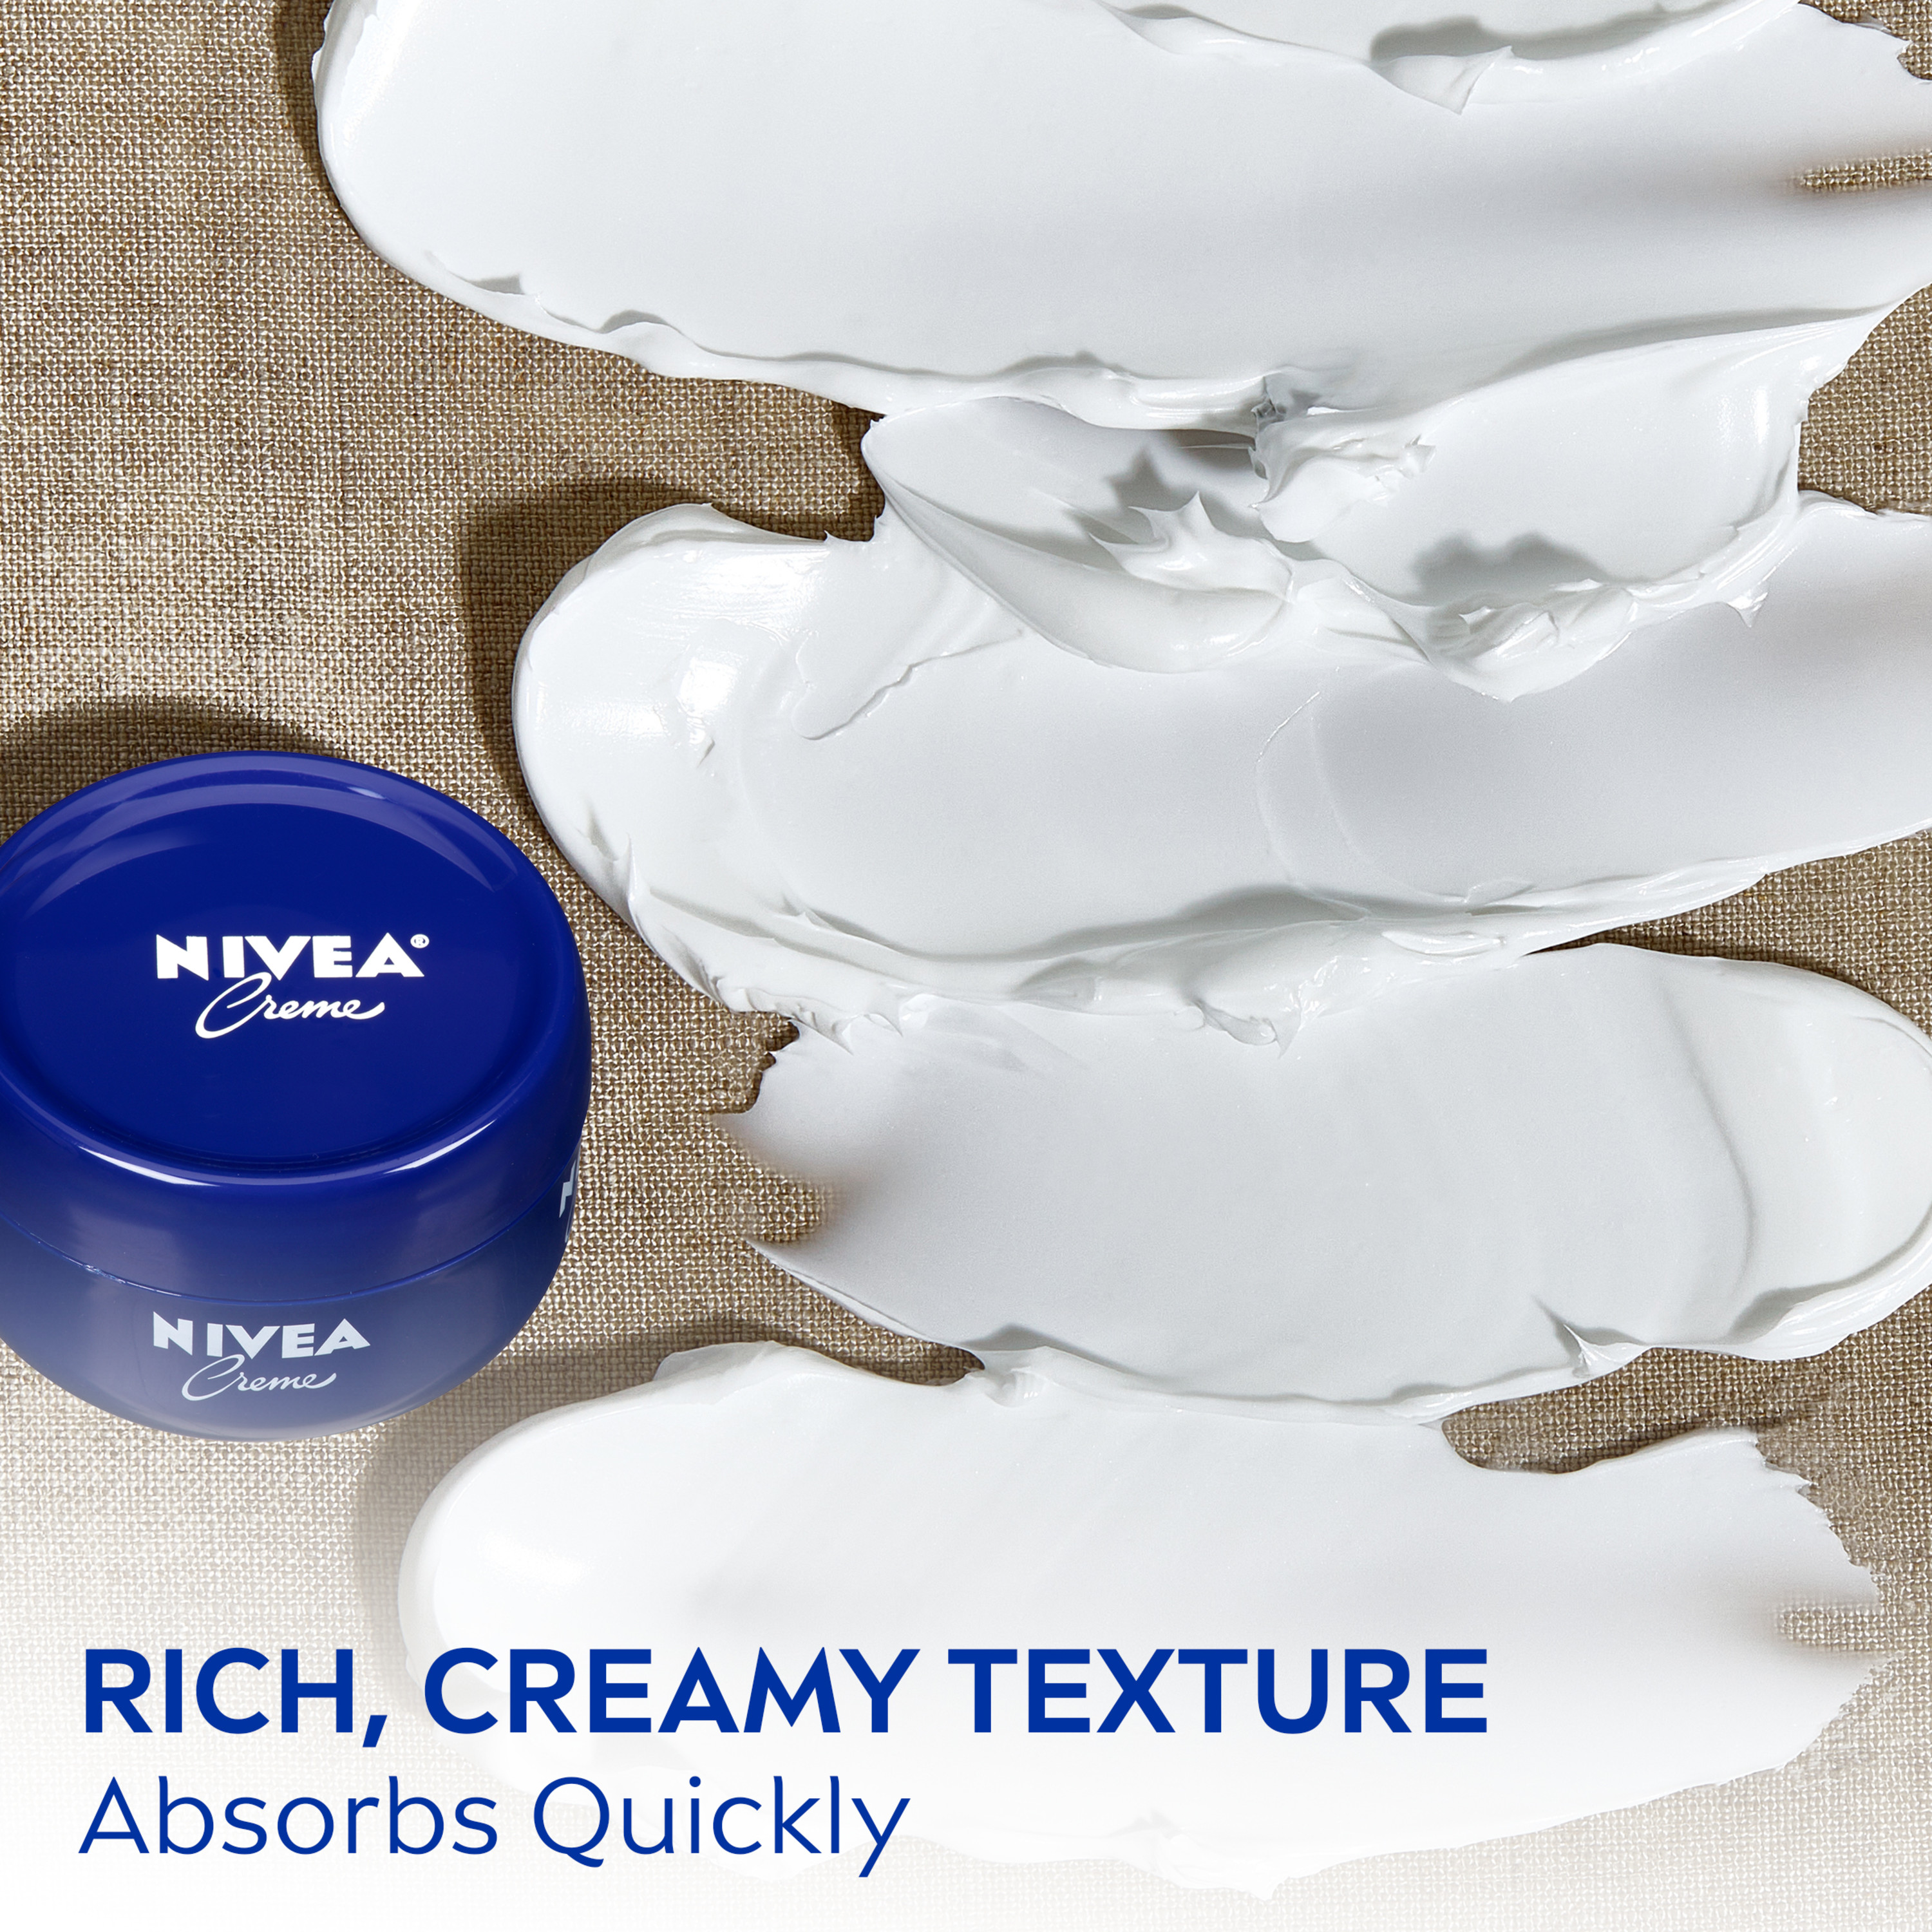 NIVEA Creme Body, Face and Hand Moisturizing Cream, 6.8 Oz Jar - image 5 of 15